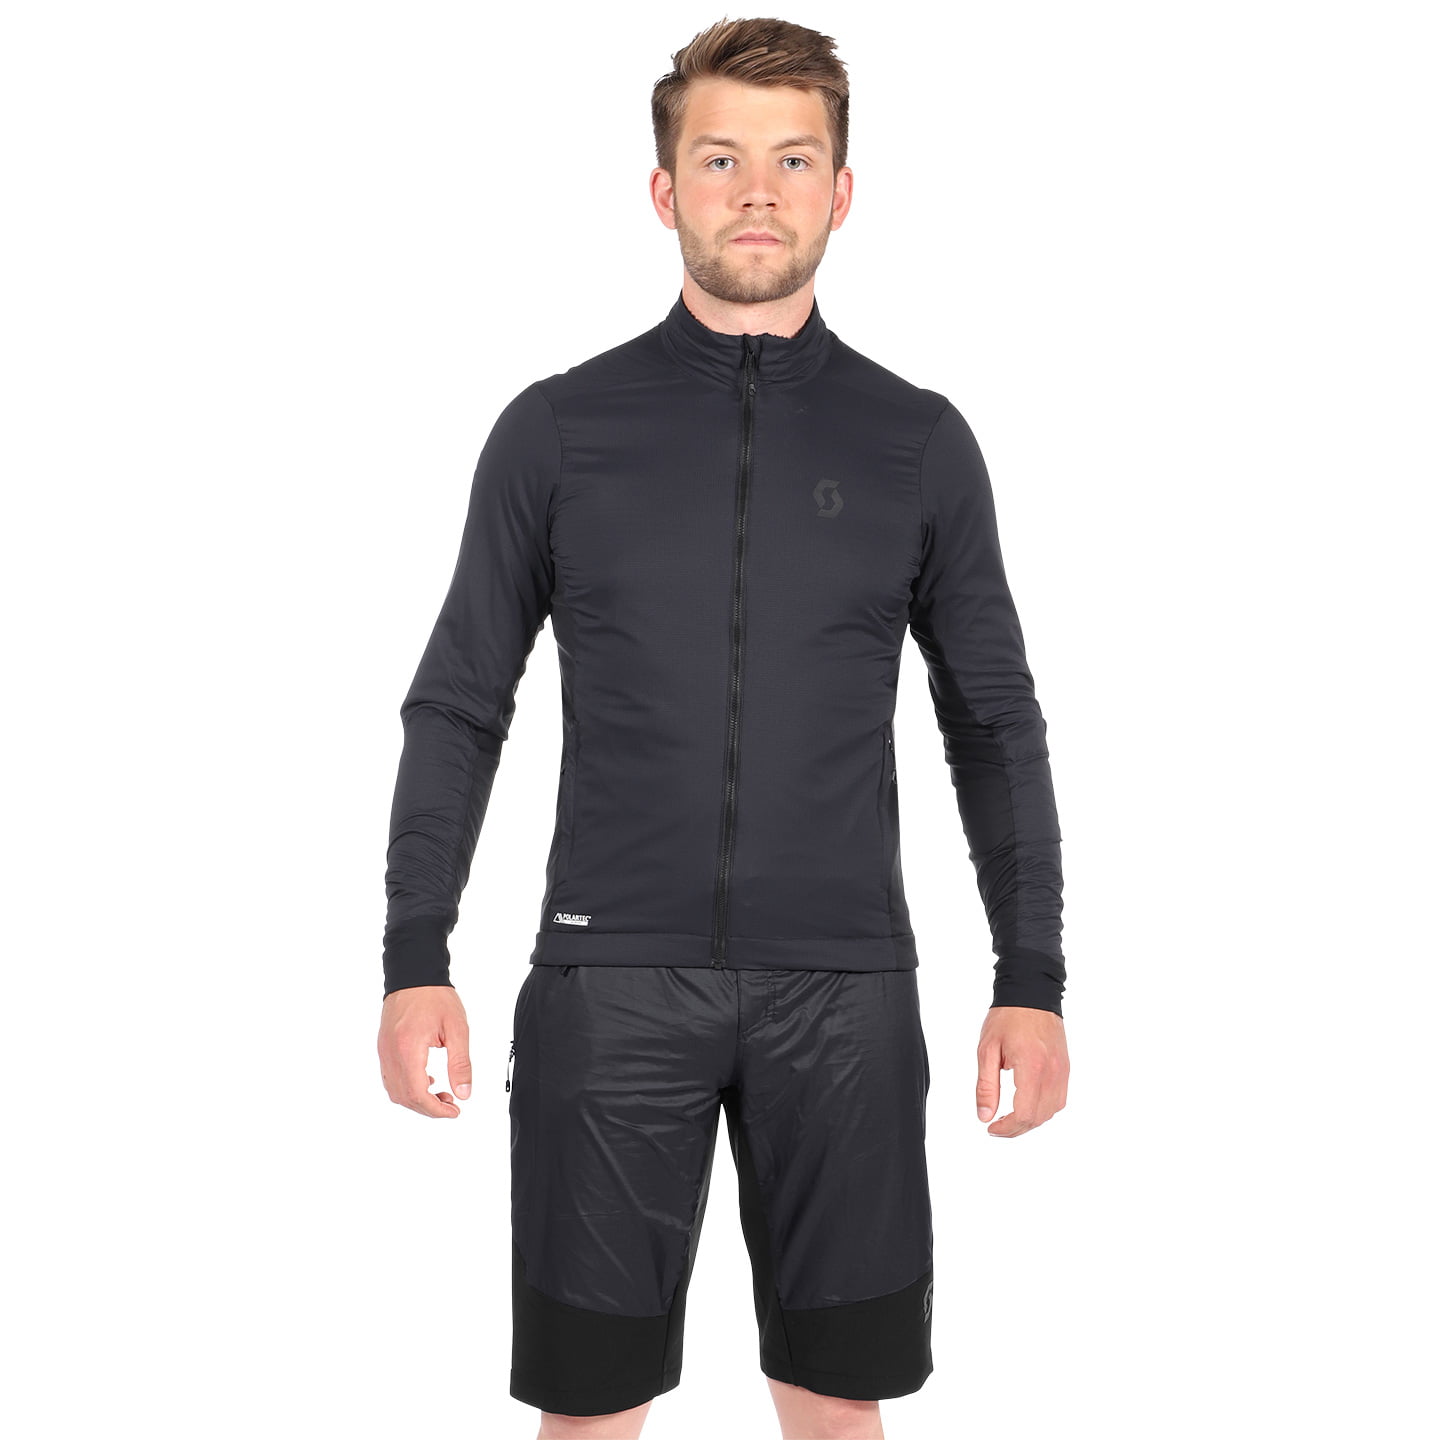 SCOTT Trail Storm Insuloft AL Set (winter jacket + cycling tights) Set (2 pieces), for men